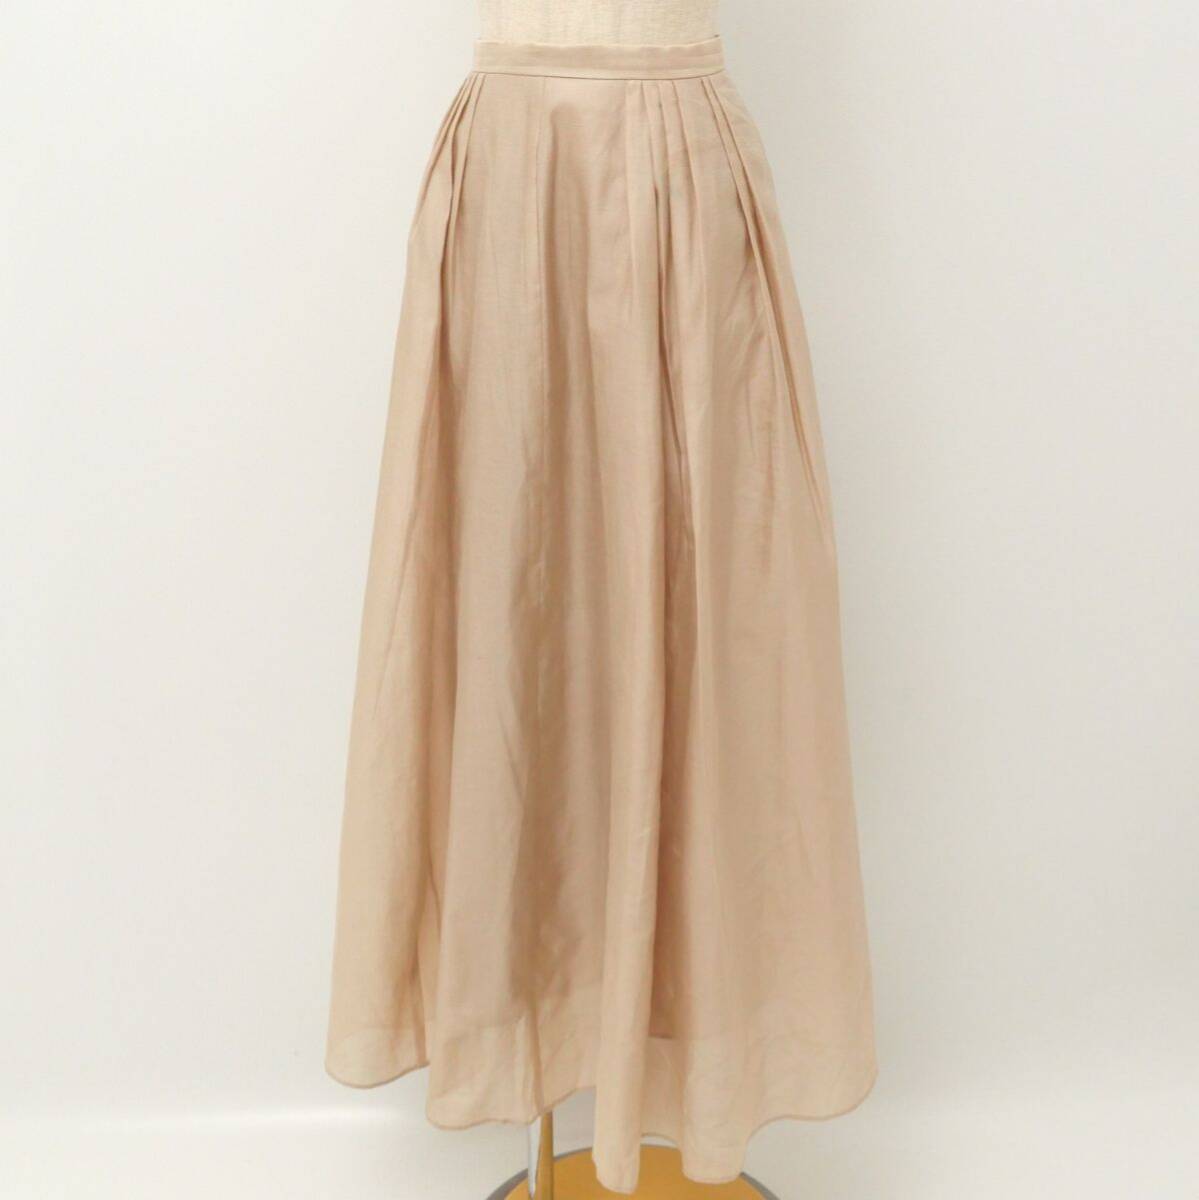 TG7205* noble NOBLEsia- жесткий ta maxi юбка длинная юбка fre attack глянец .. чувство бежевый сделано в Японии размер 36